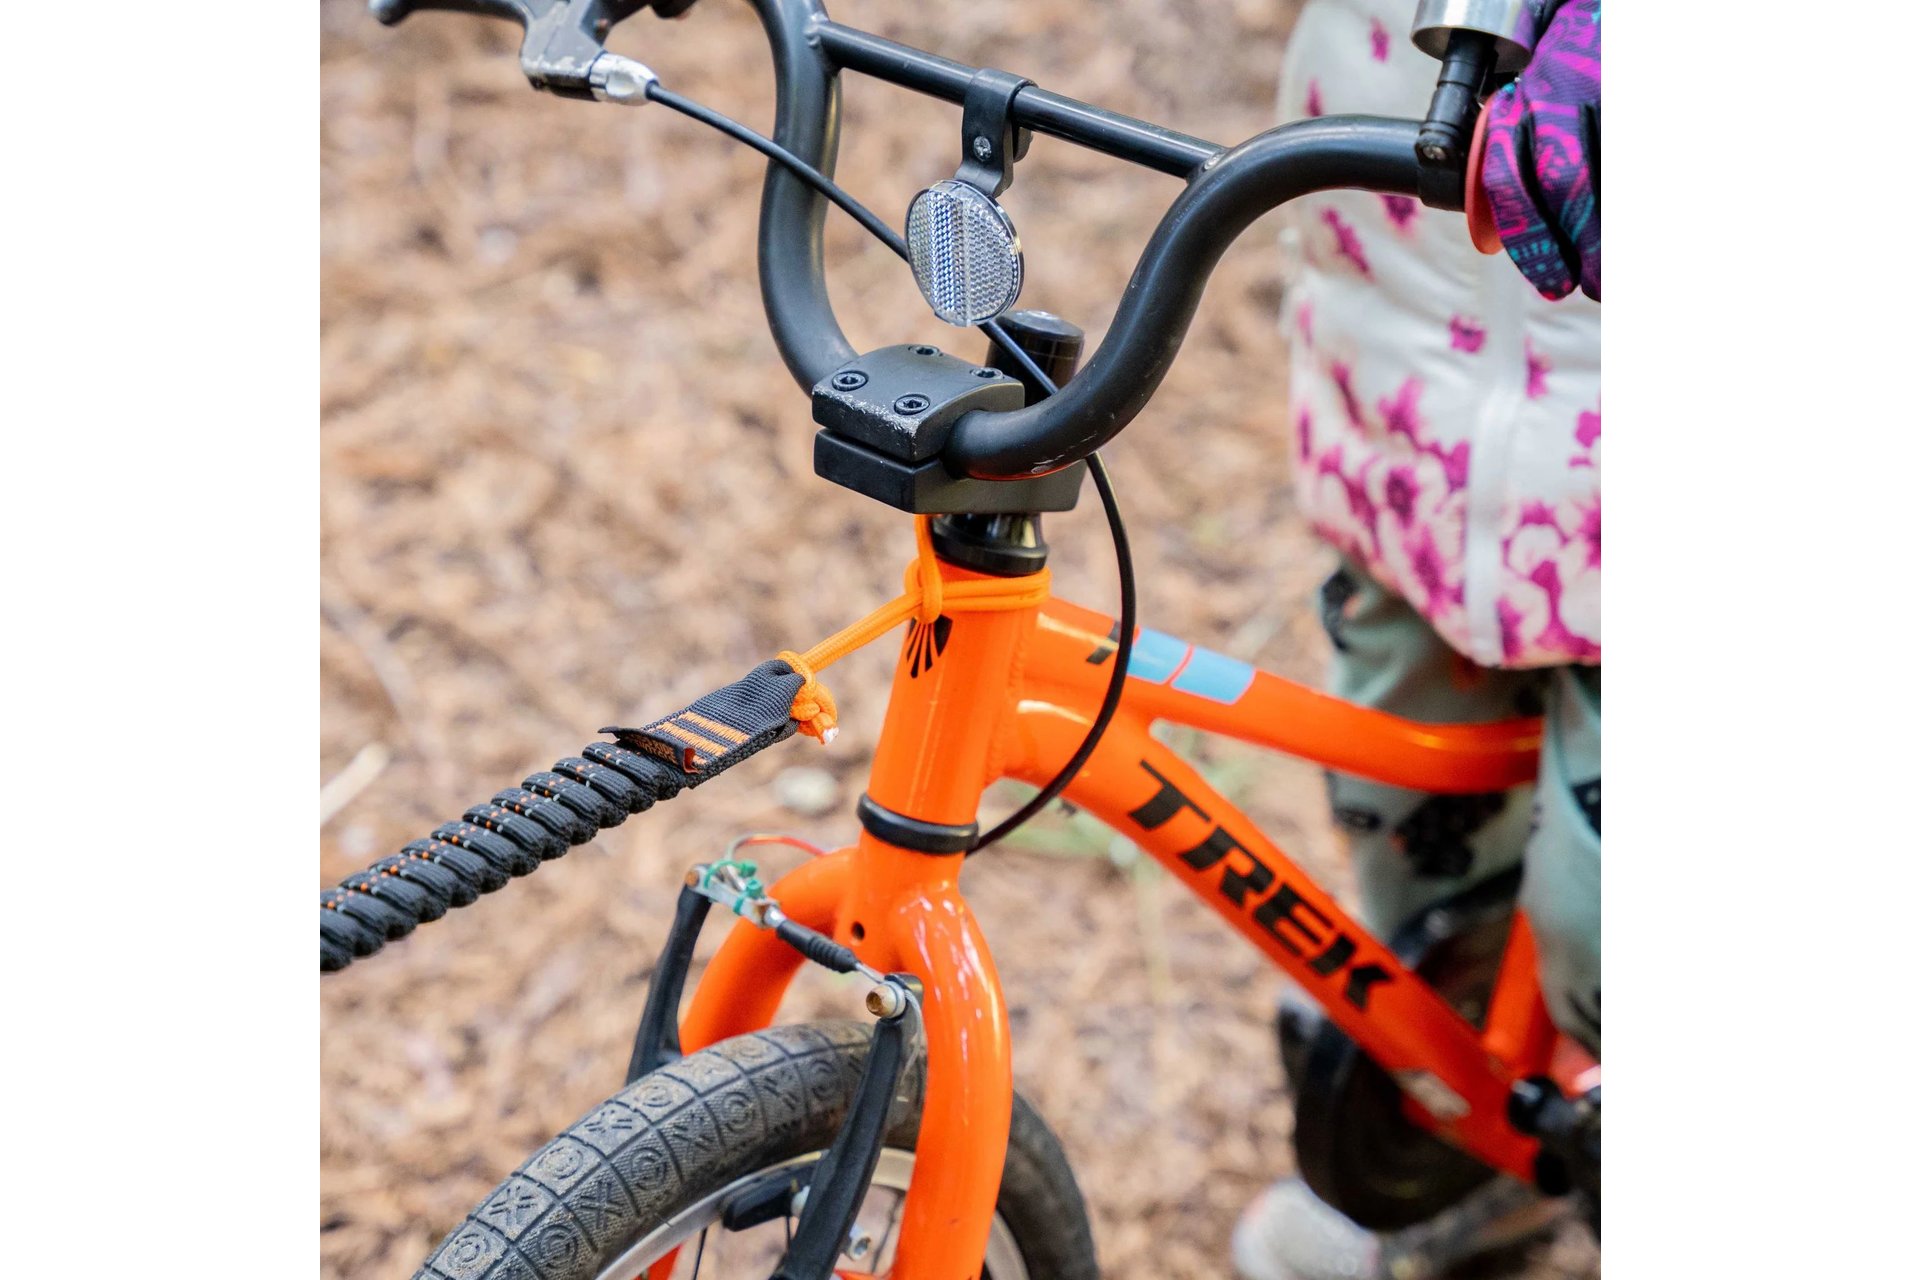 Fahrrad Abschleppseil für Kinder Cord MTB Trailer Road Pull Strap Stretch  Pet